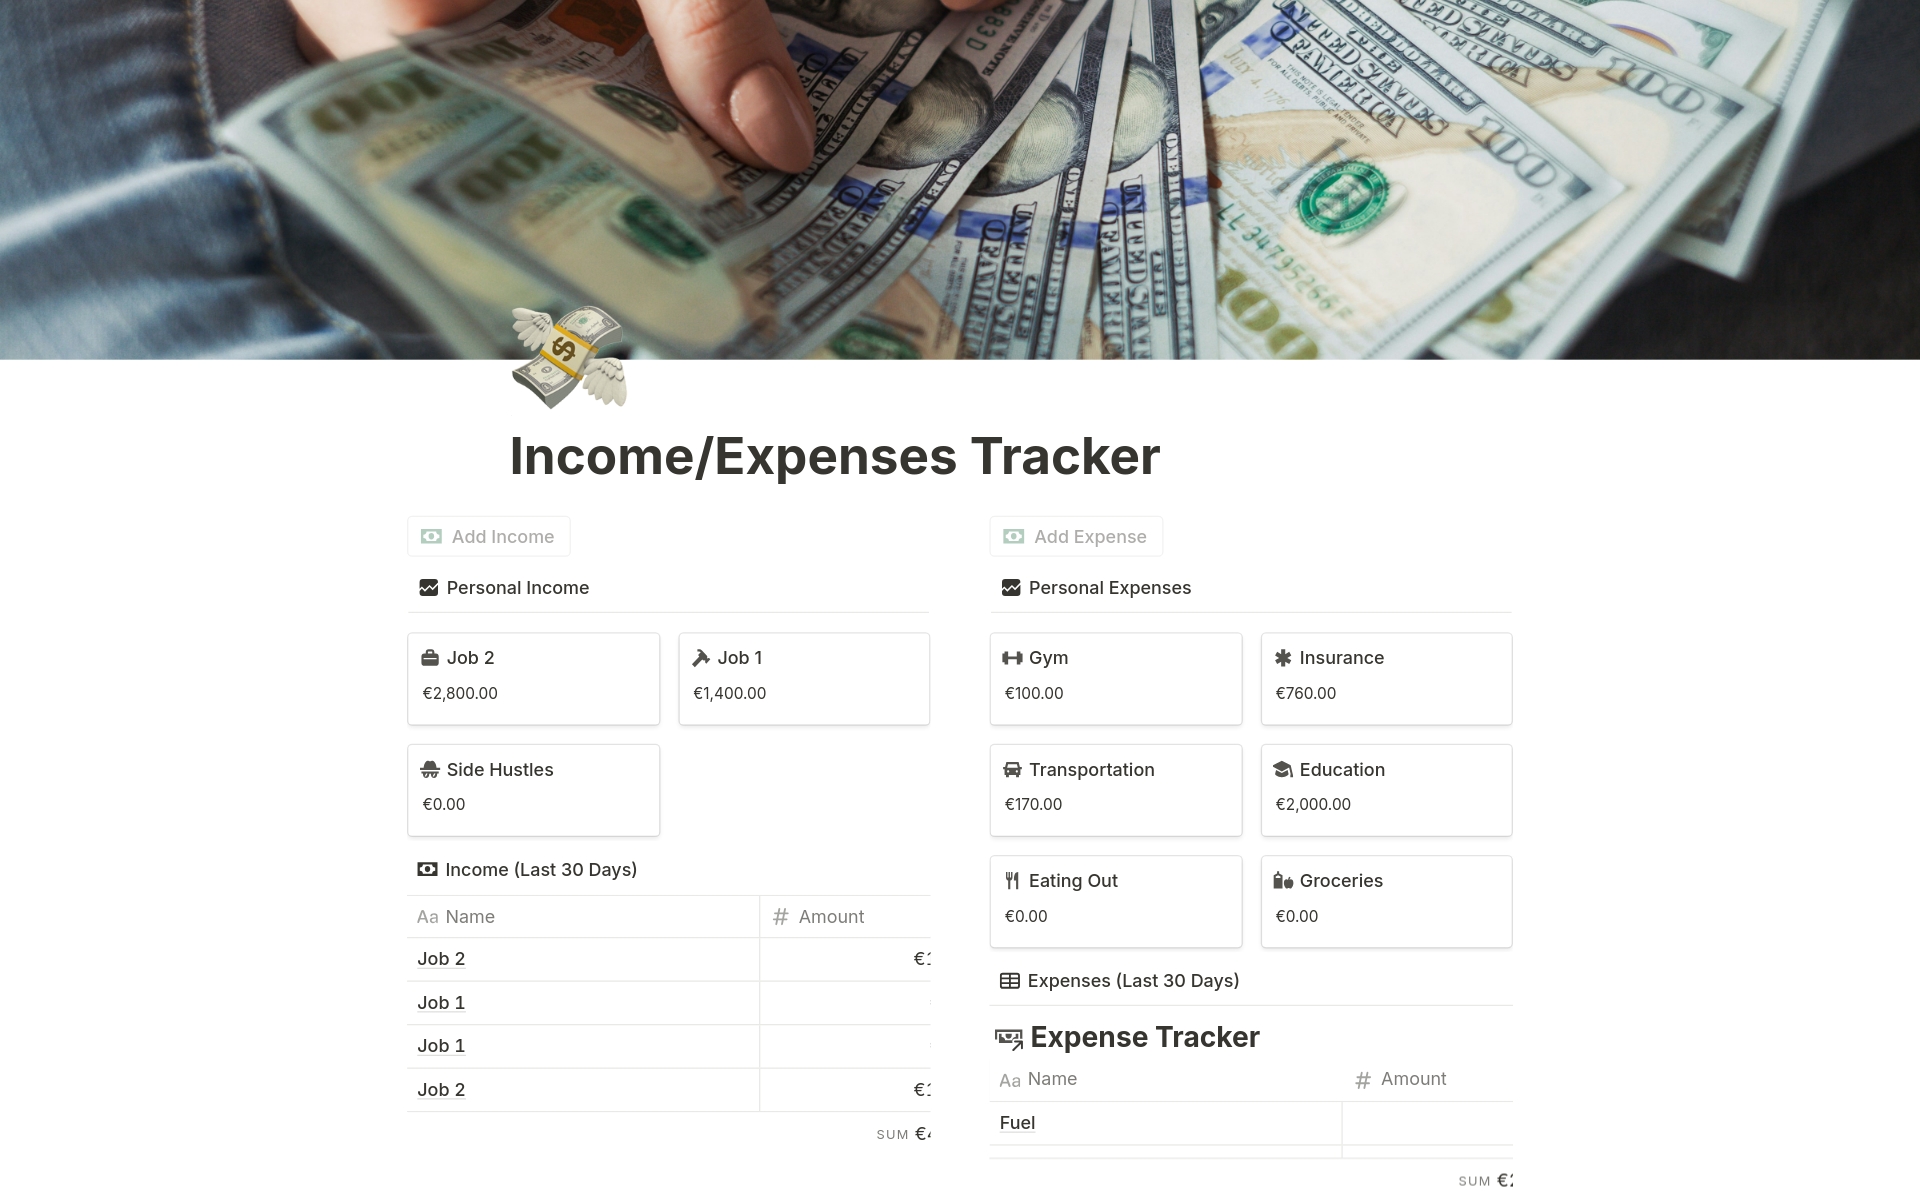 Vista previa de una plantilla para Income/Expenses Tracker